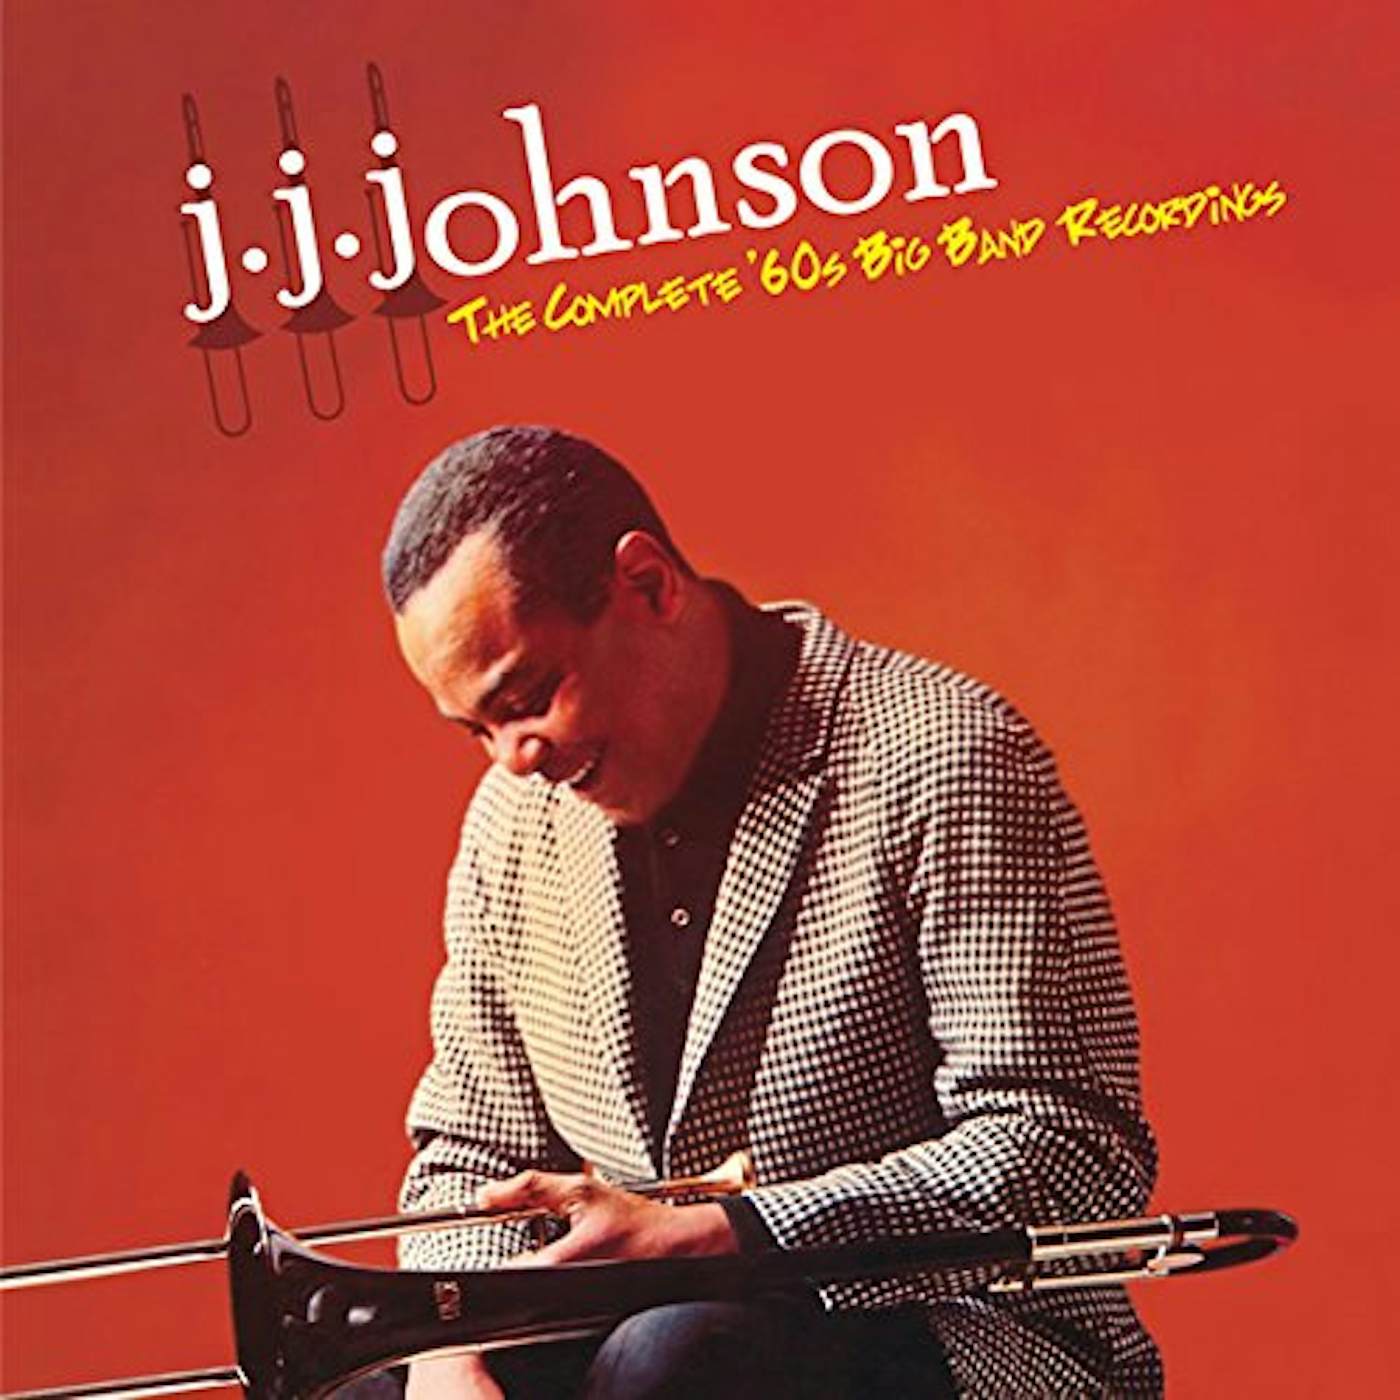 J.J. Johnson COMPLETE 60'S BIG BAND RECORDINGS CD